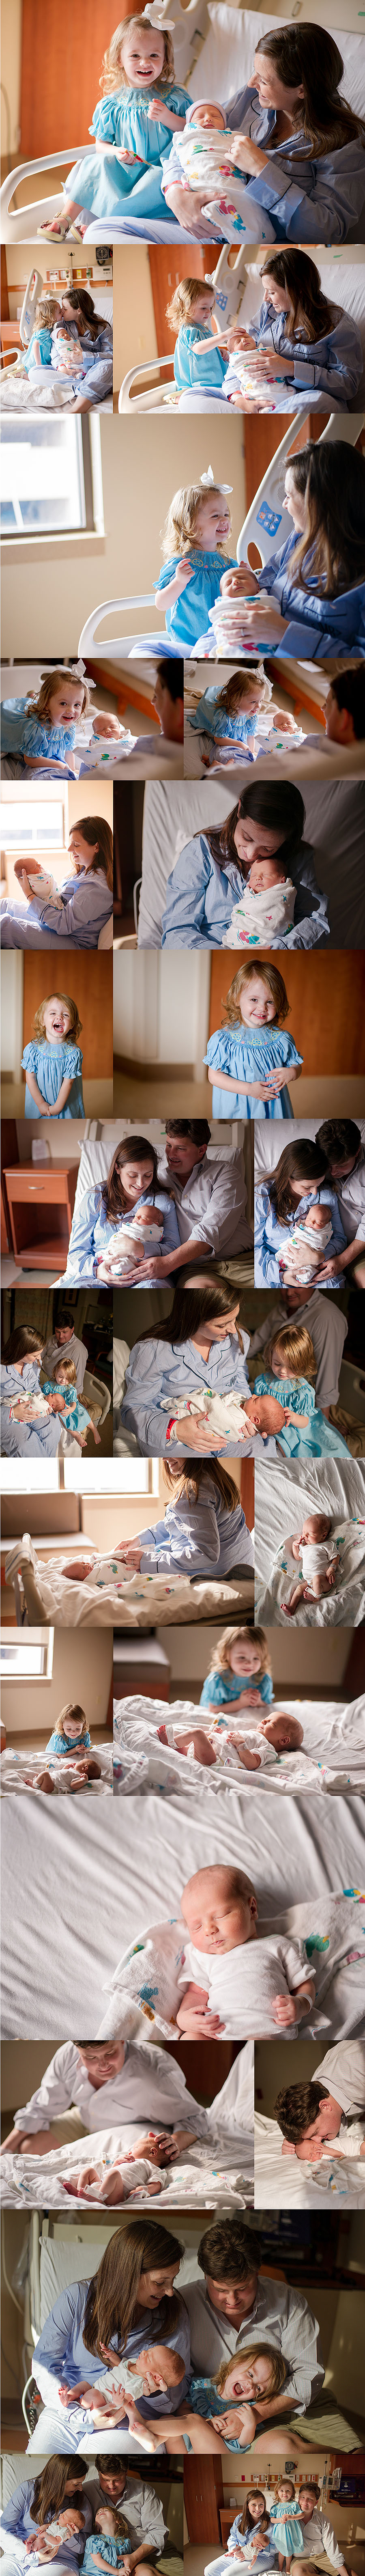 Family Newborn Hospital Photos